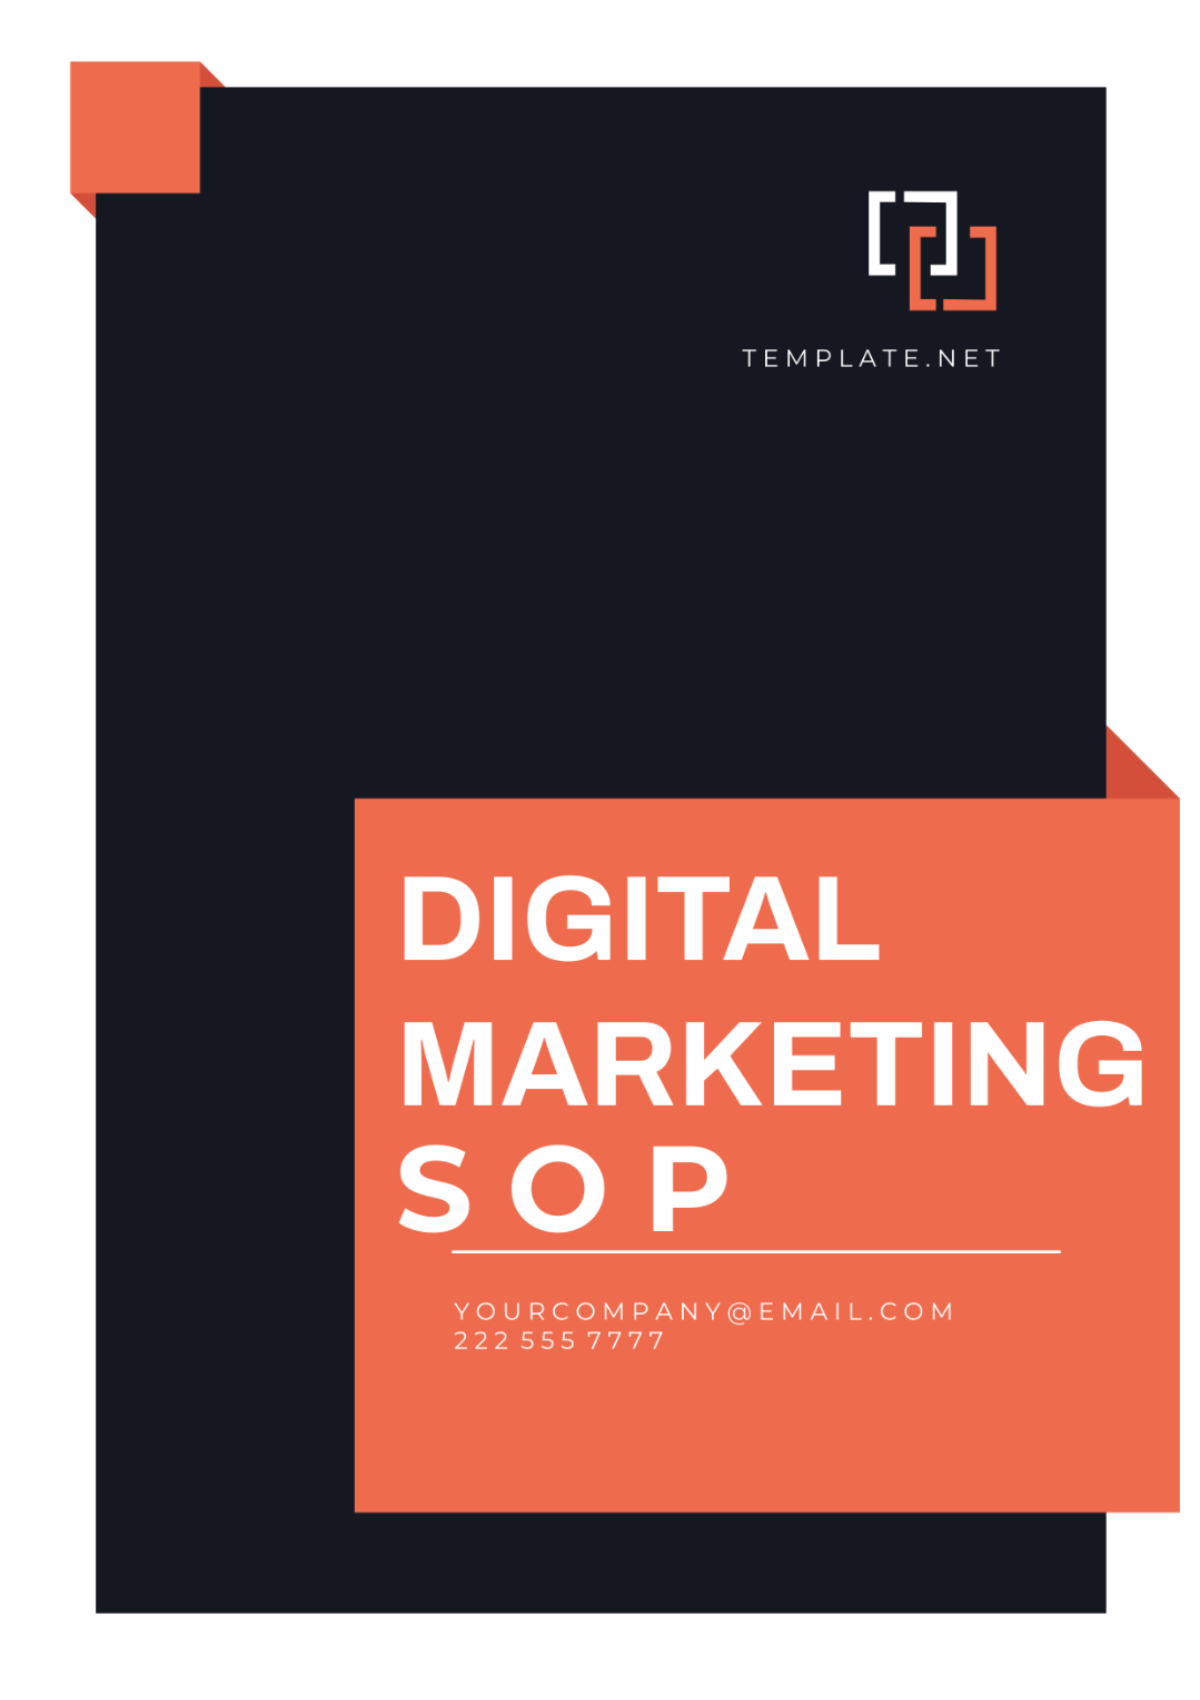 Digital Marketing SOP Template